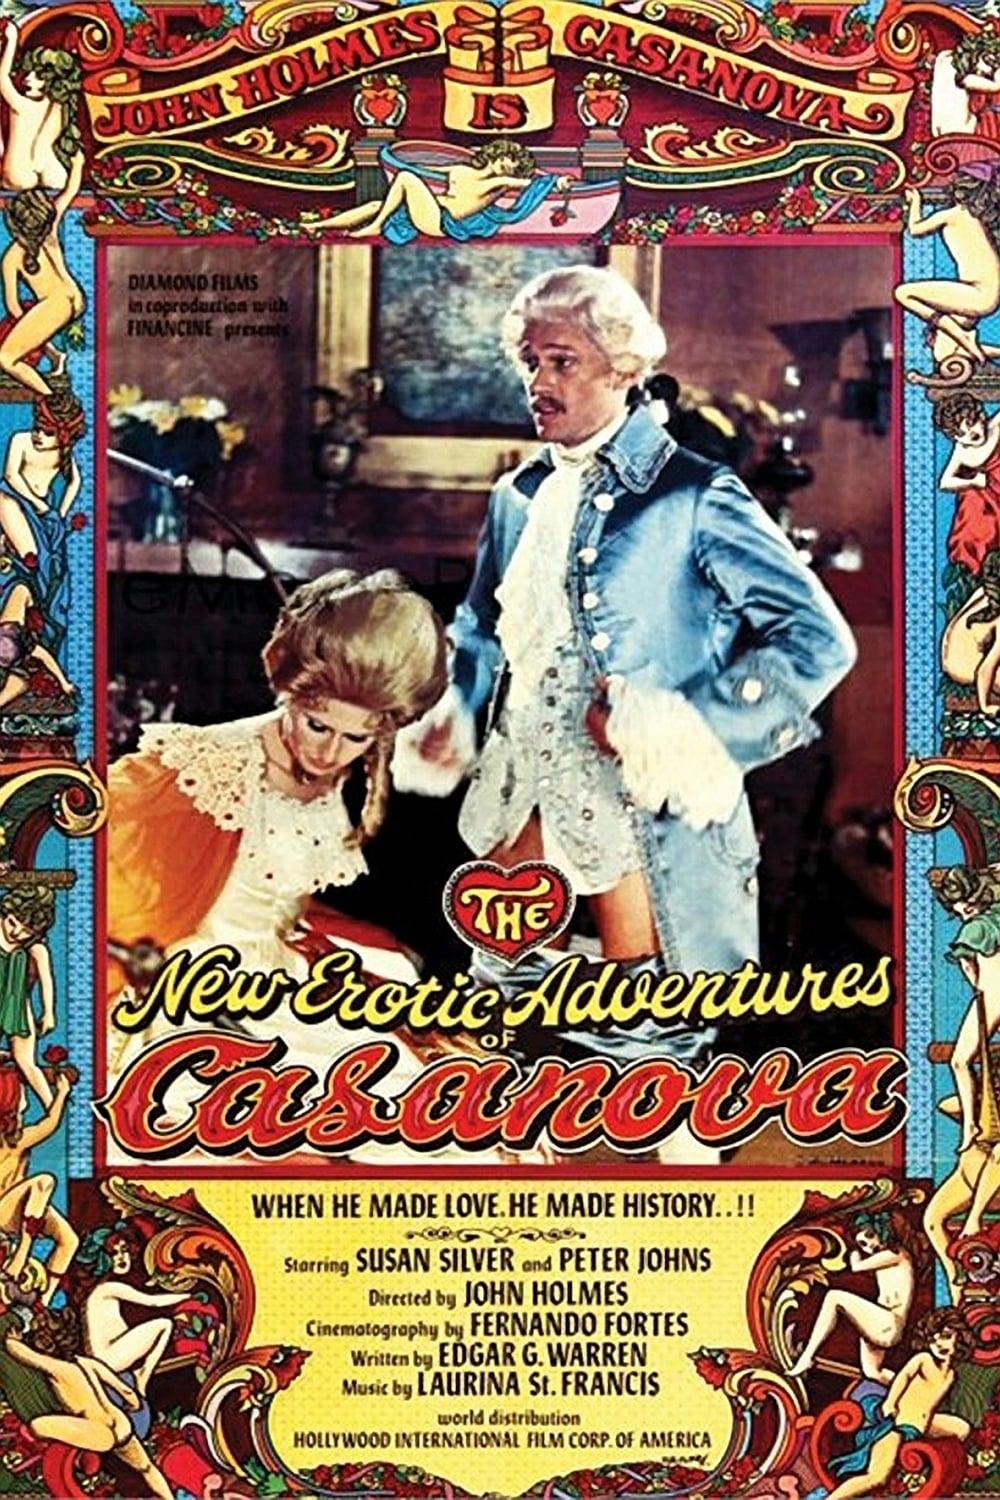 The New Erotic Adventures of Casanova poster